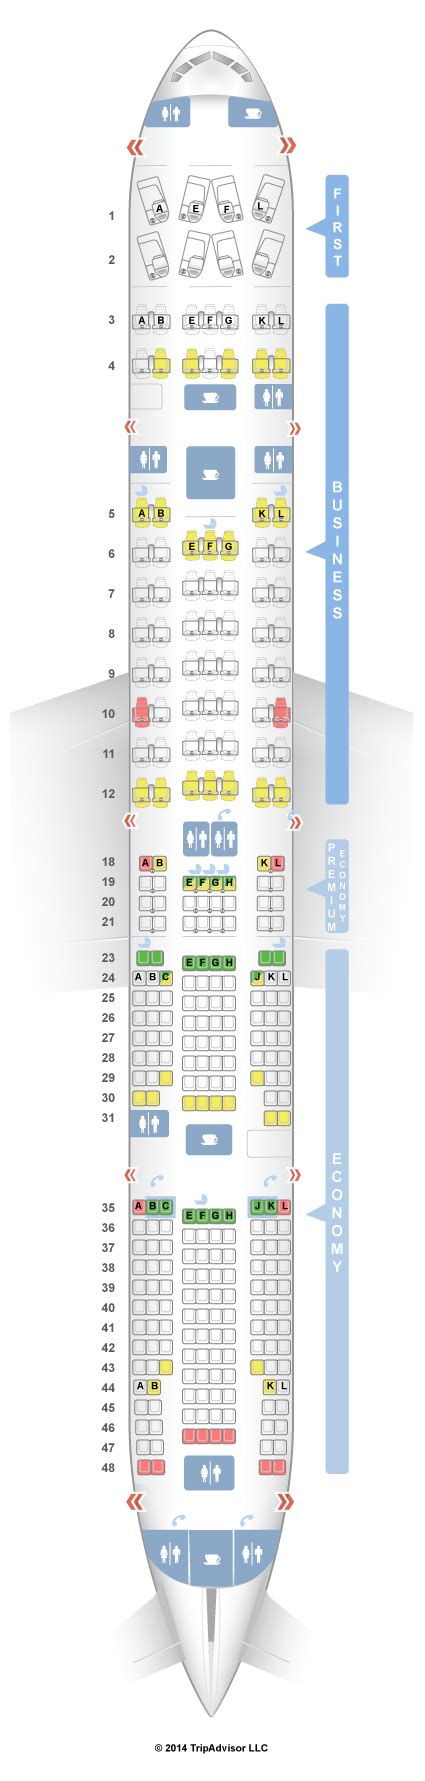 Seatguru Seat Map Air France Boeing Er W Four Class Travel My Xxx Hot